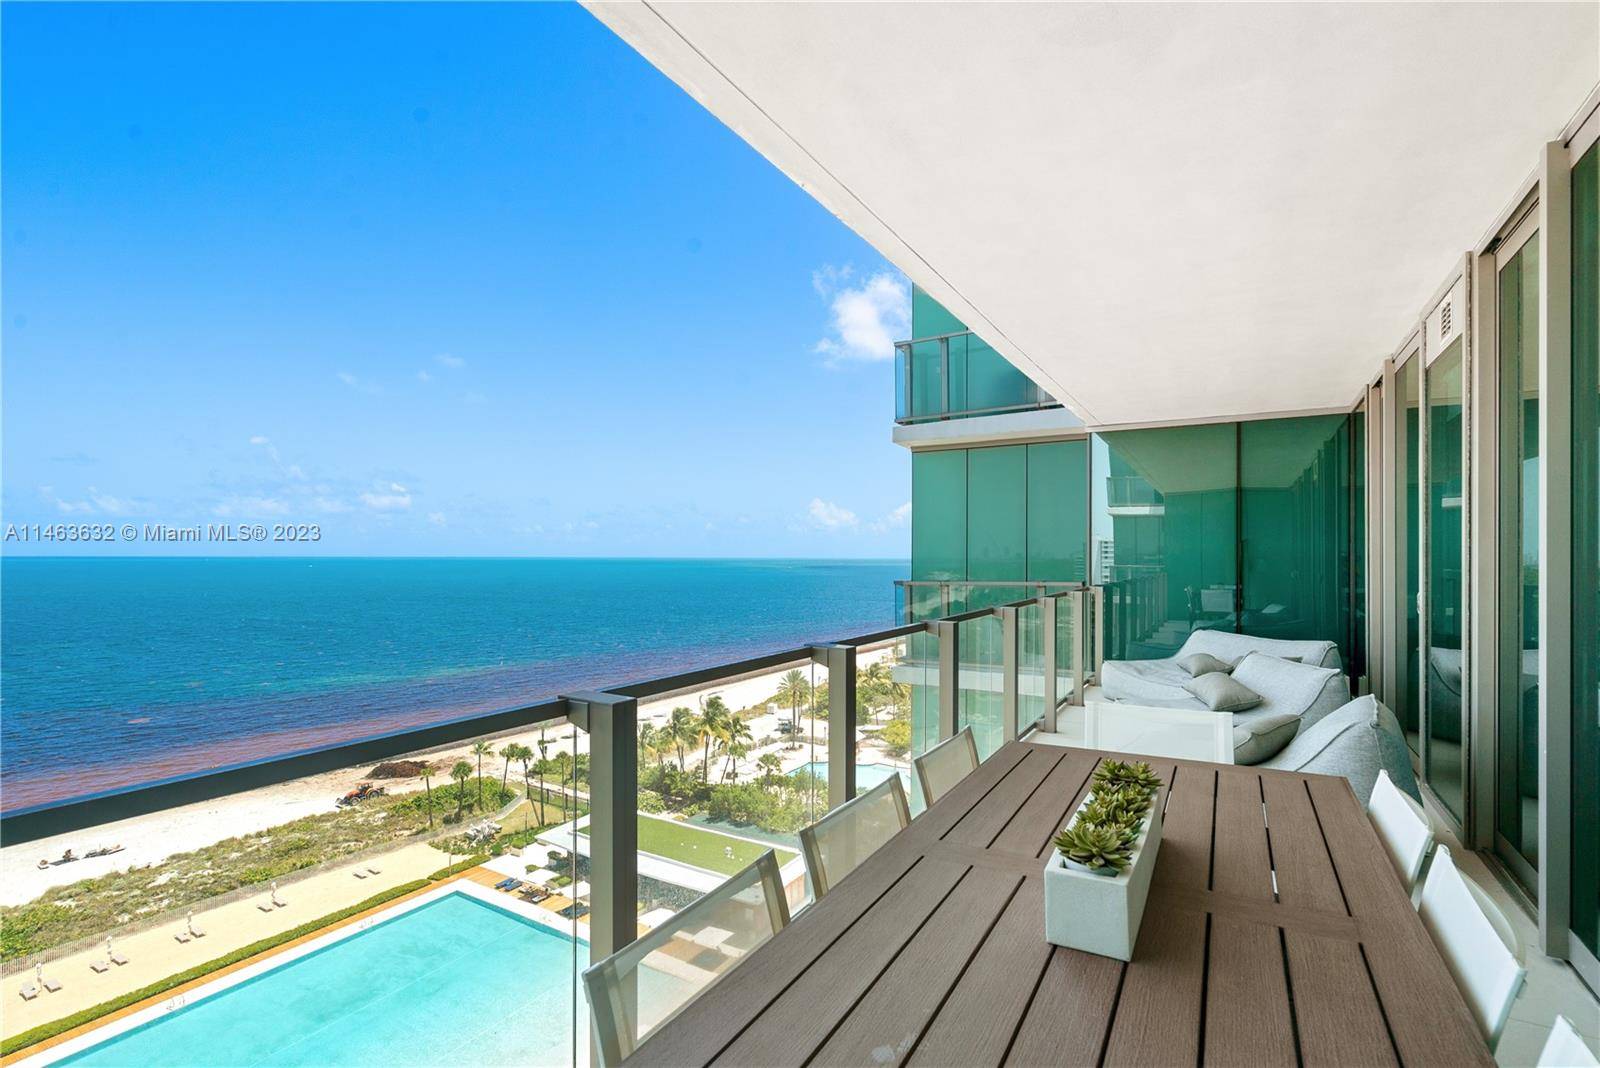 Luxurious seasonal lease in Key Biscayne, OCEANA is the best building in the island.